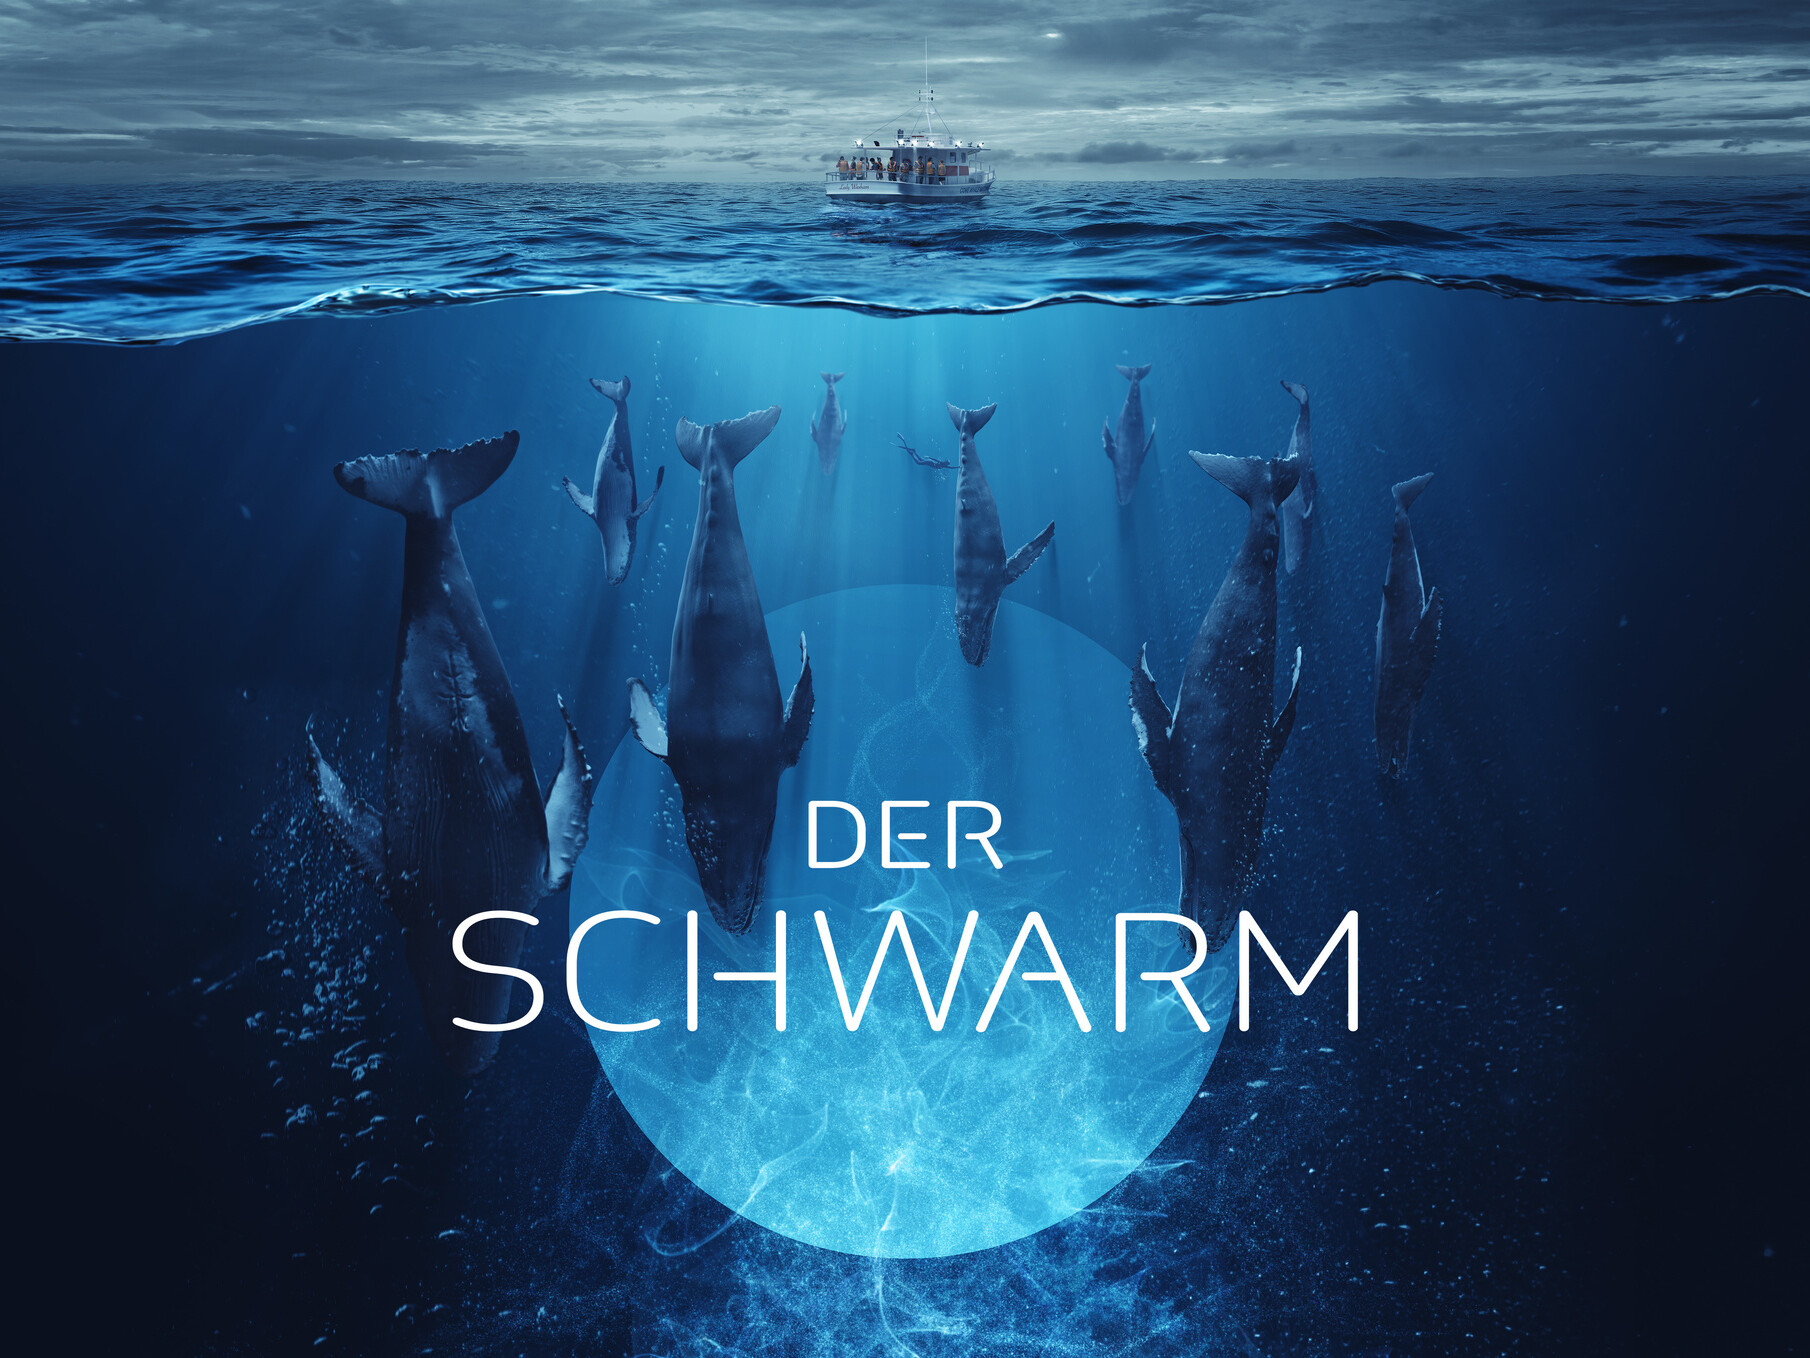 Der Schwarm promotion image.